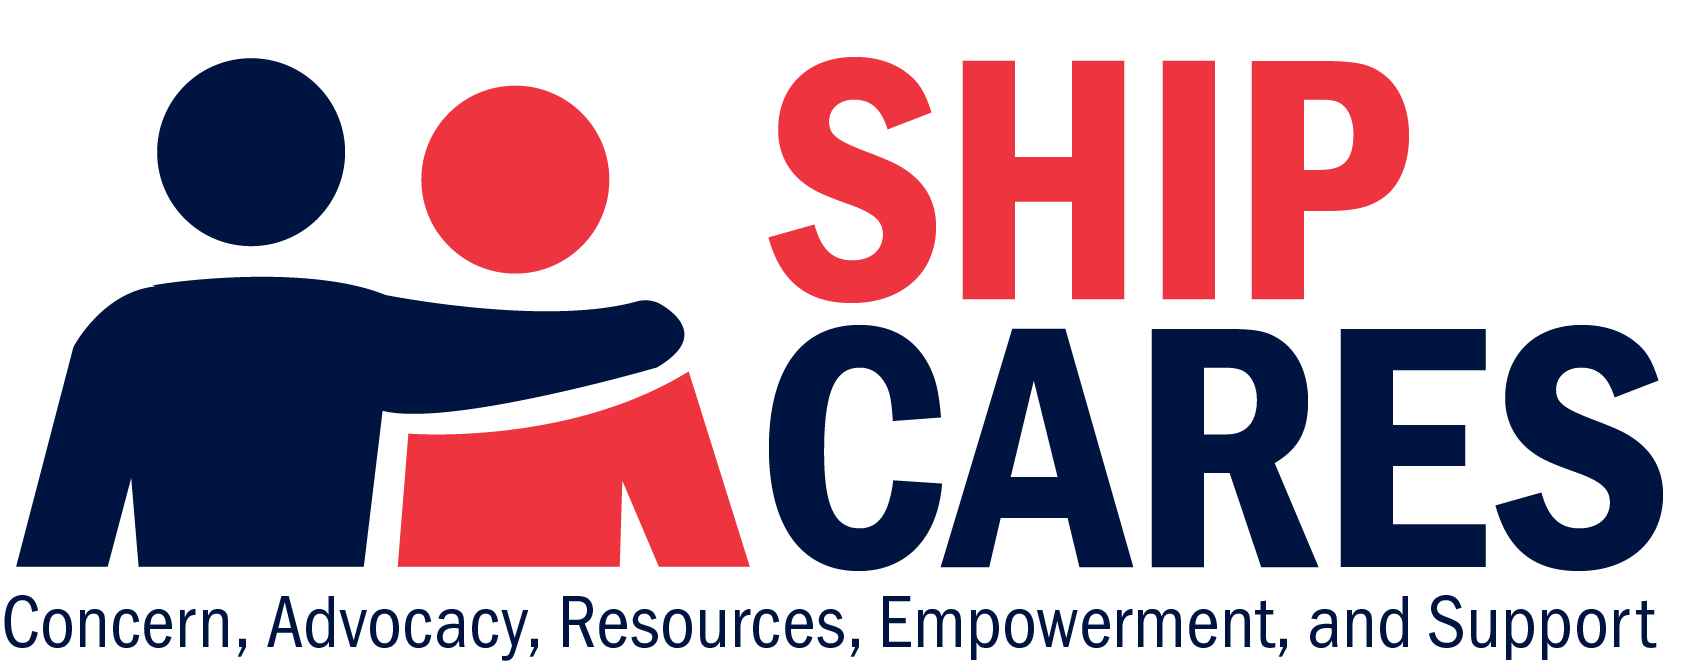 ShipCARES Logo.png